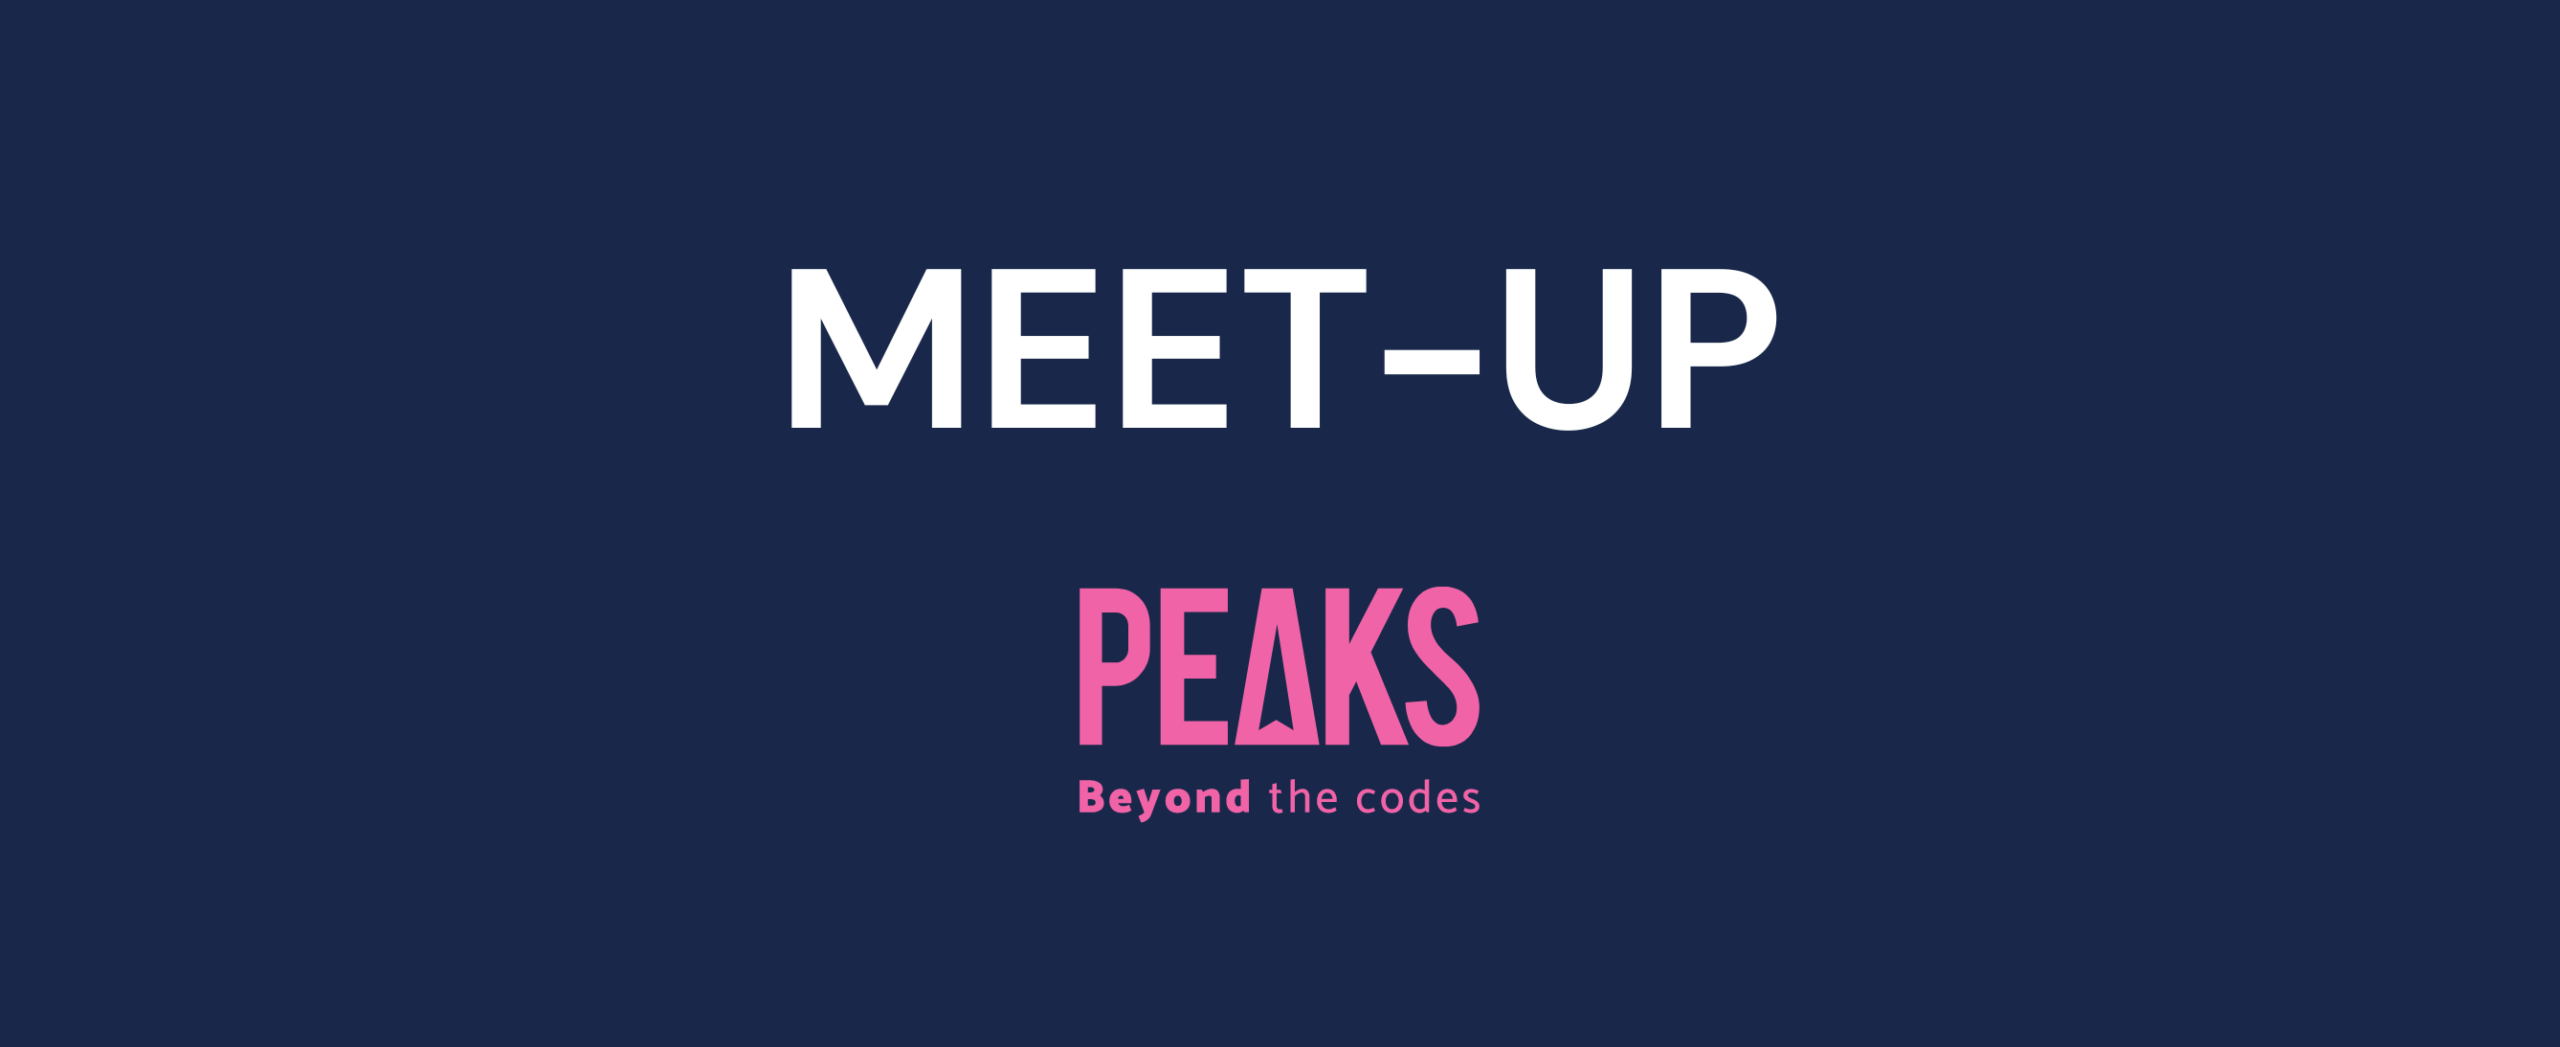 Meet up Lyon Peaks : Make IT Green again